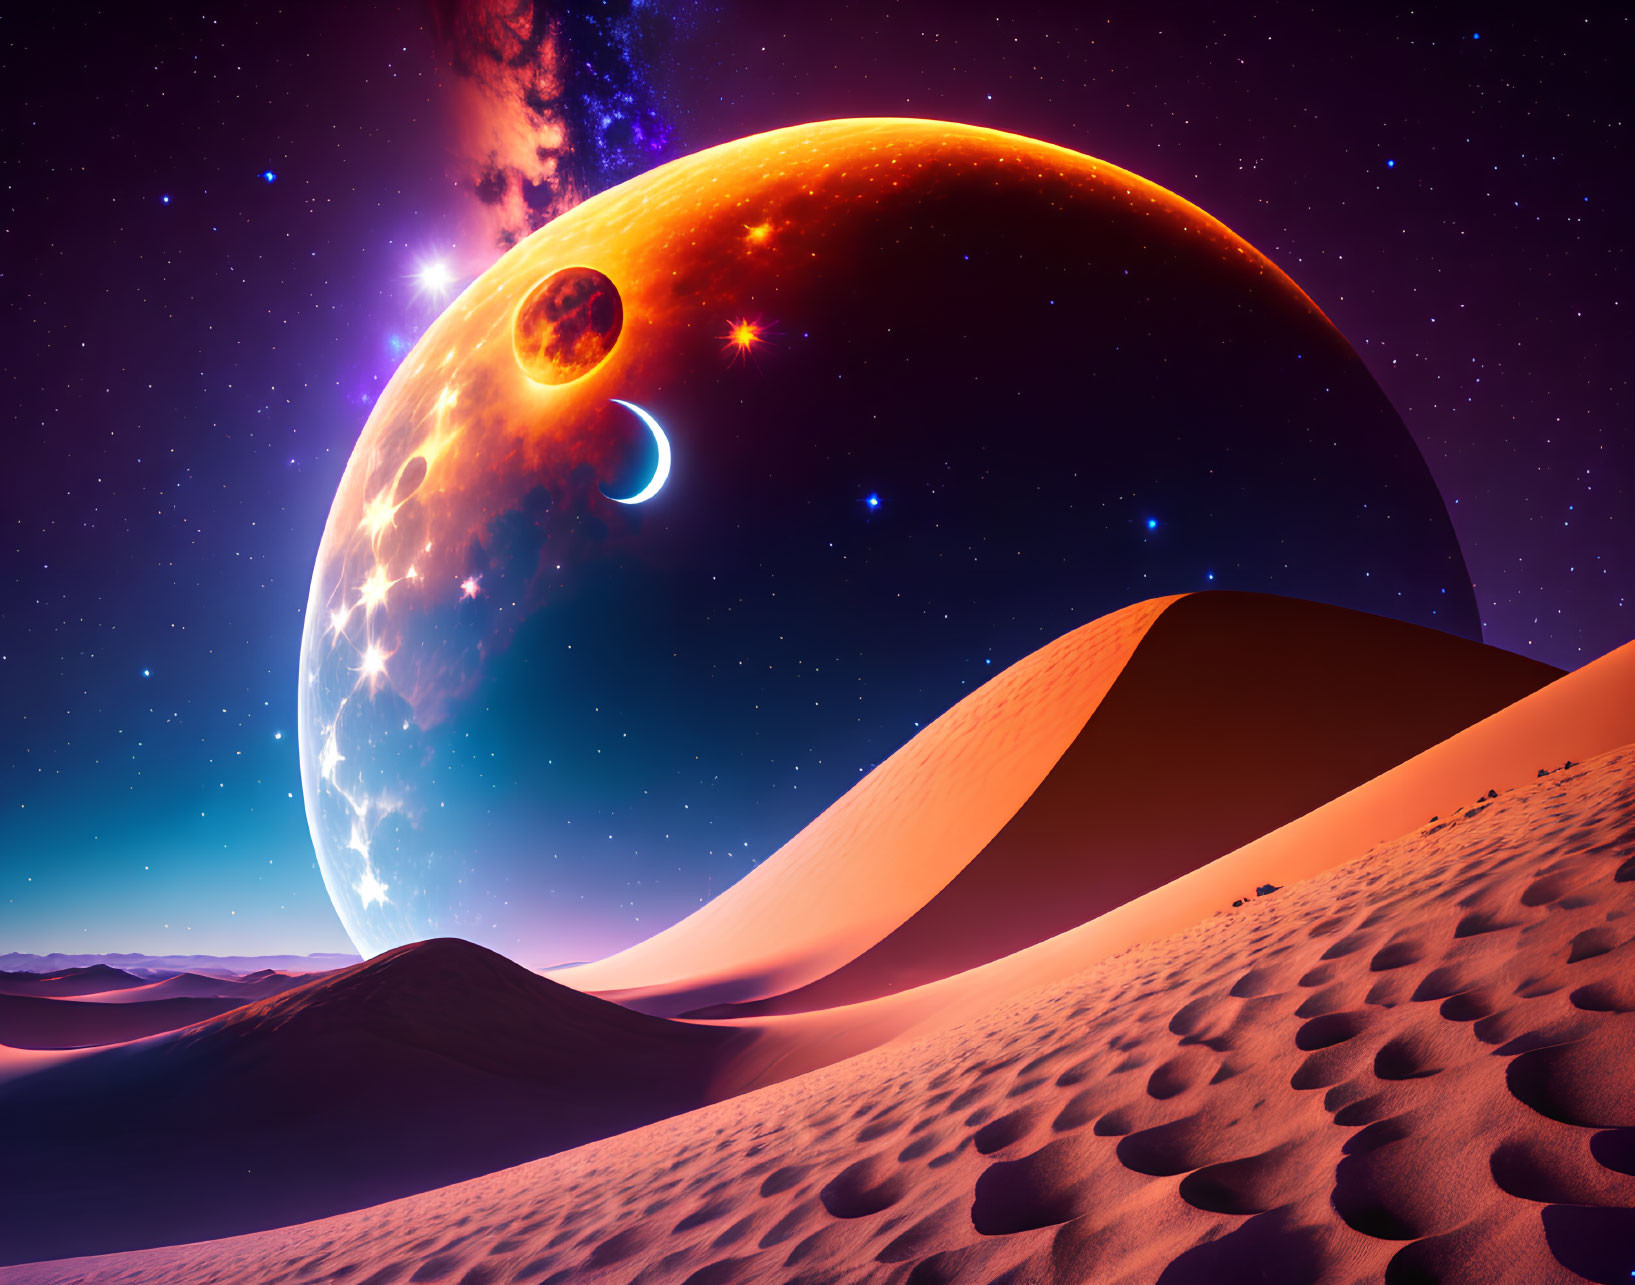 Vividly Colored Planet Rising Over Desert Landscape